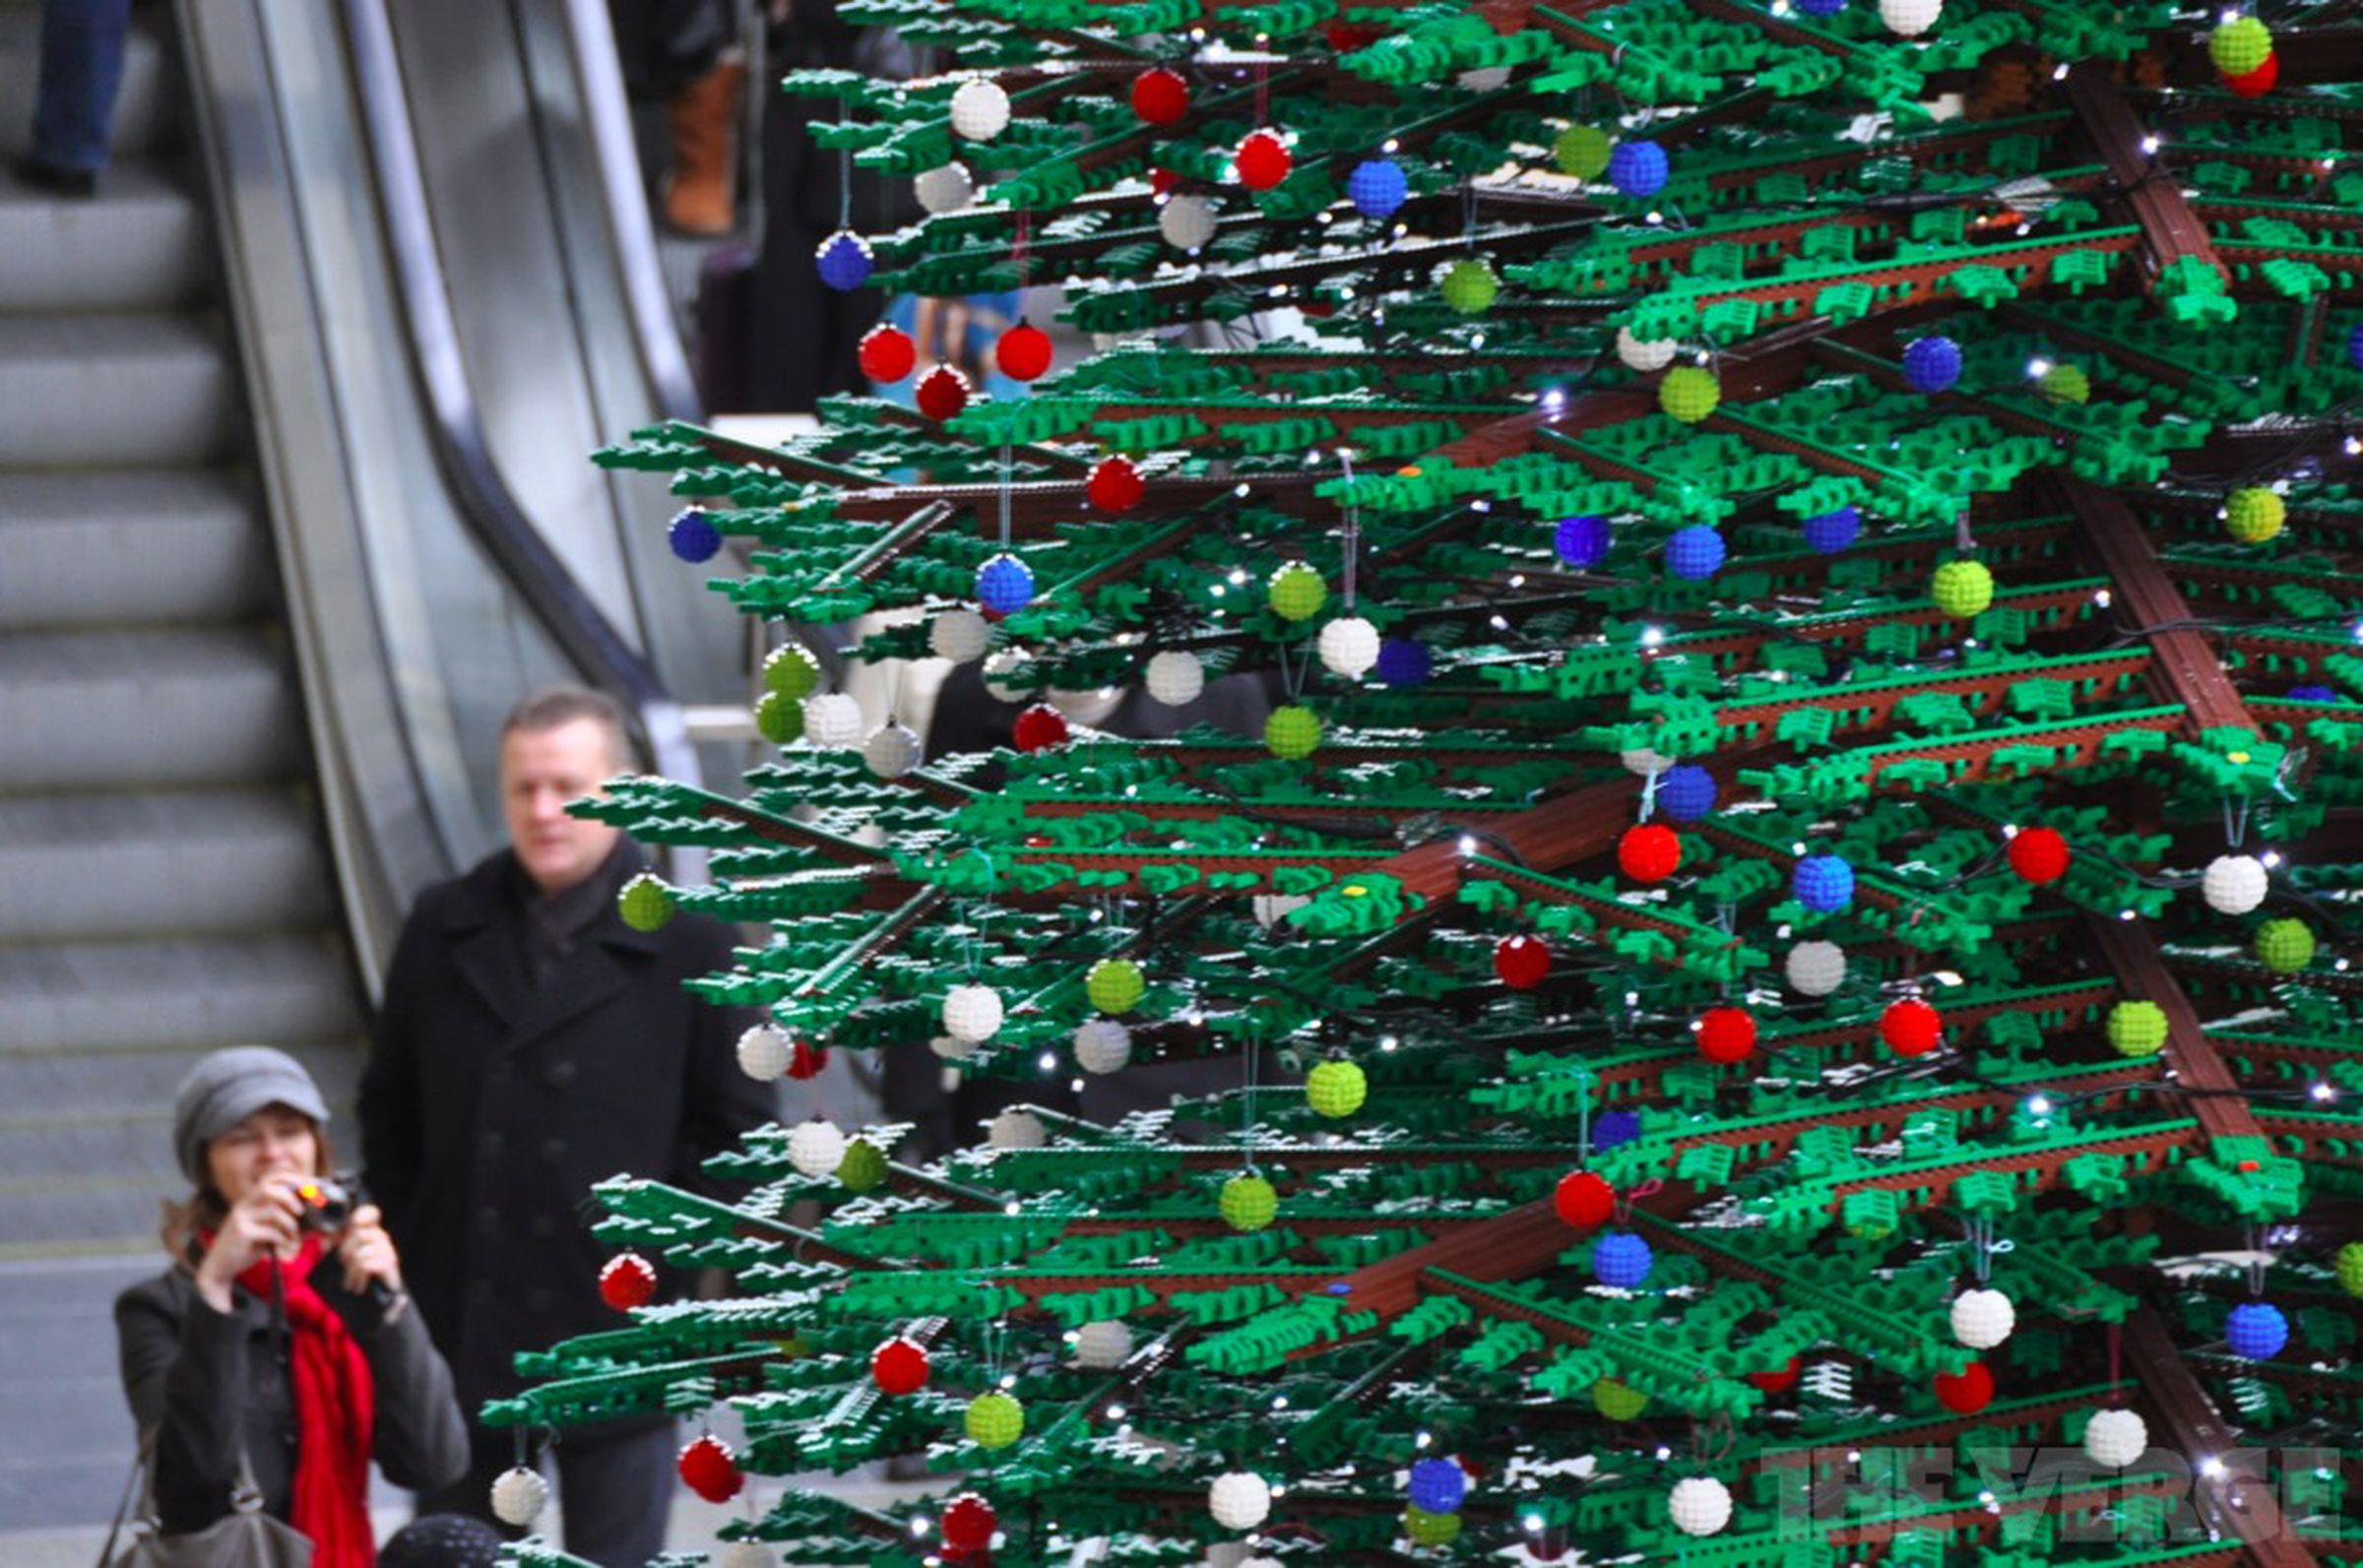 Lego Christmas tree inside London's St Pancras Station